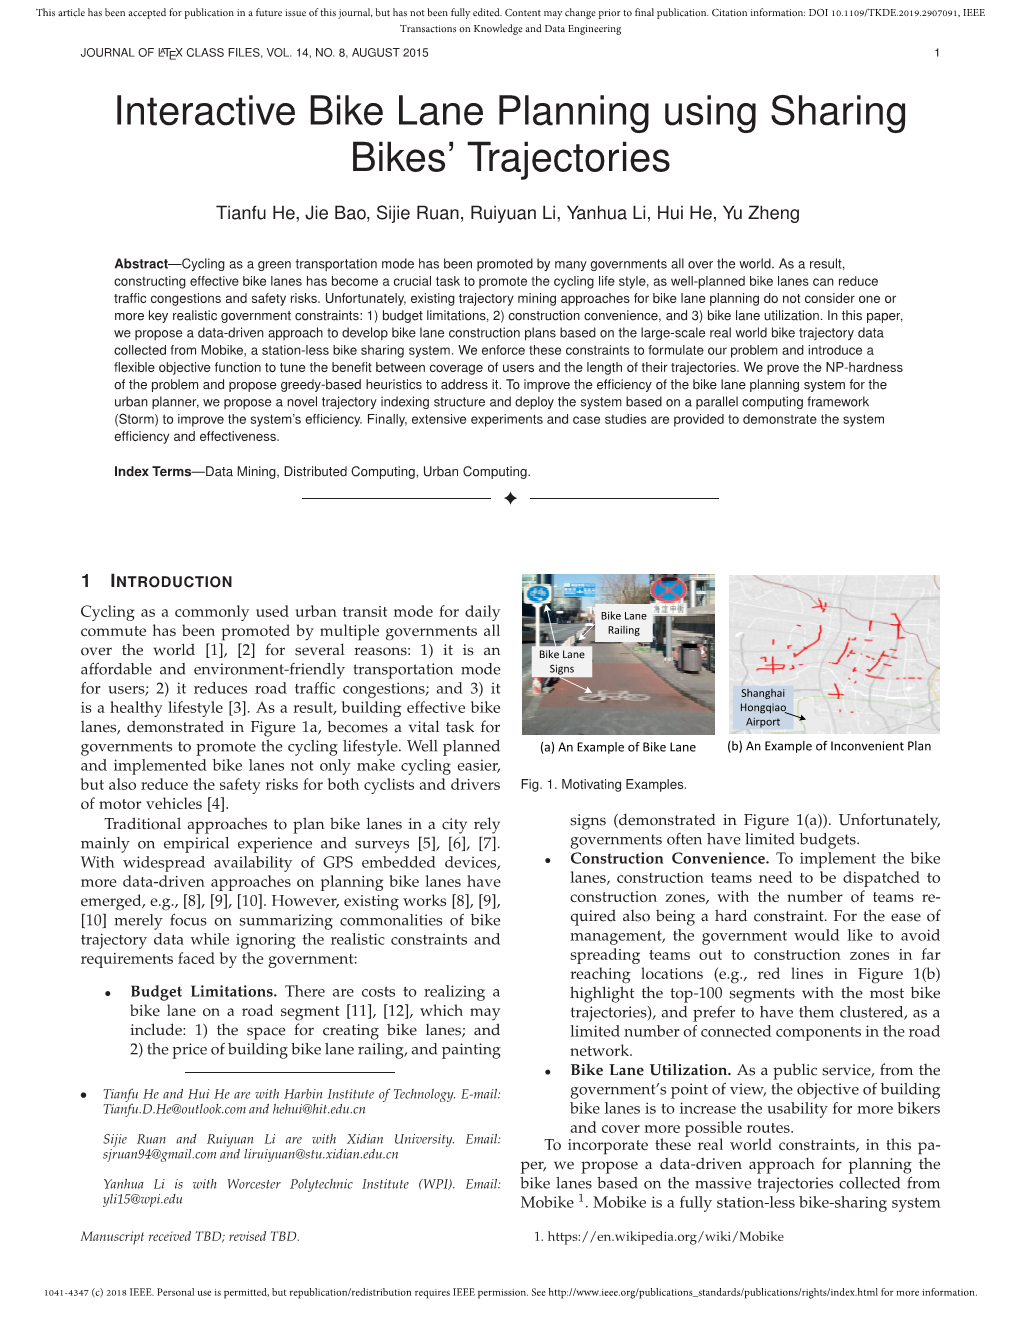 Interactive Bike Lane Planning Using Sharing Bikes’ Trajectories